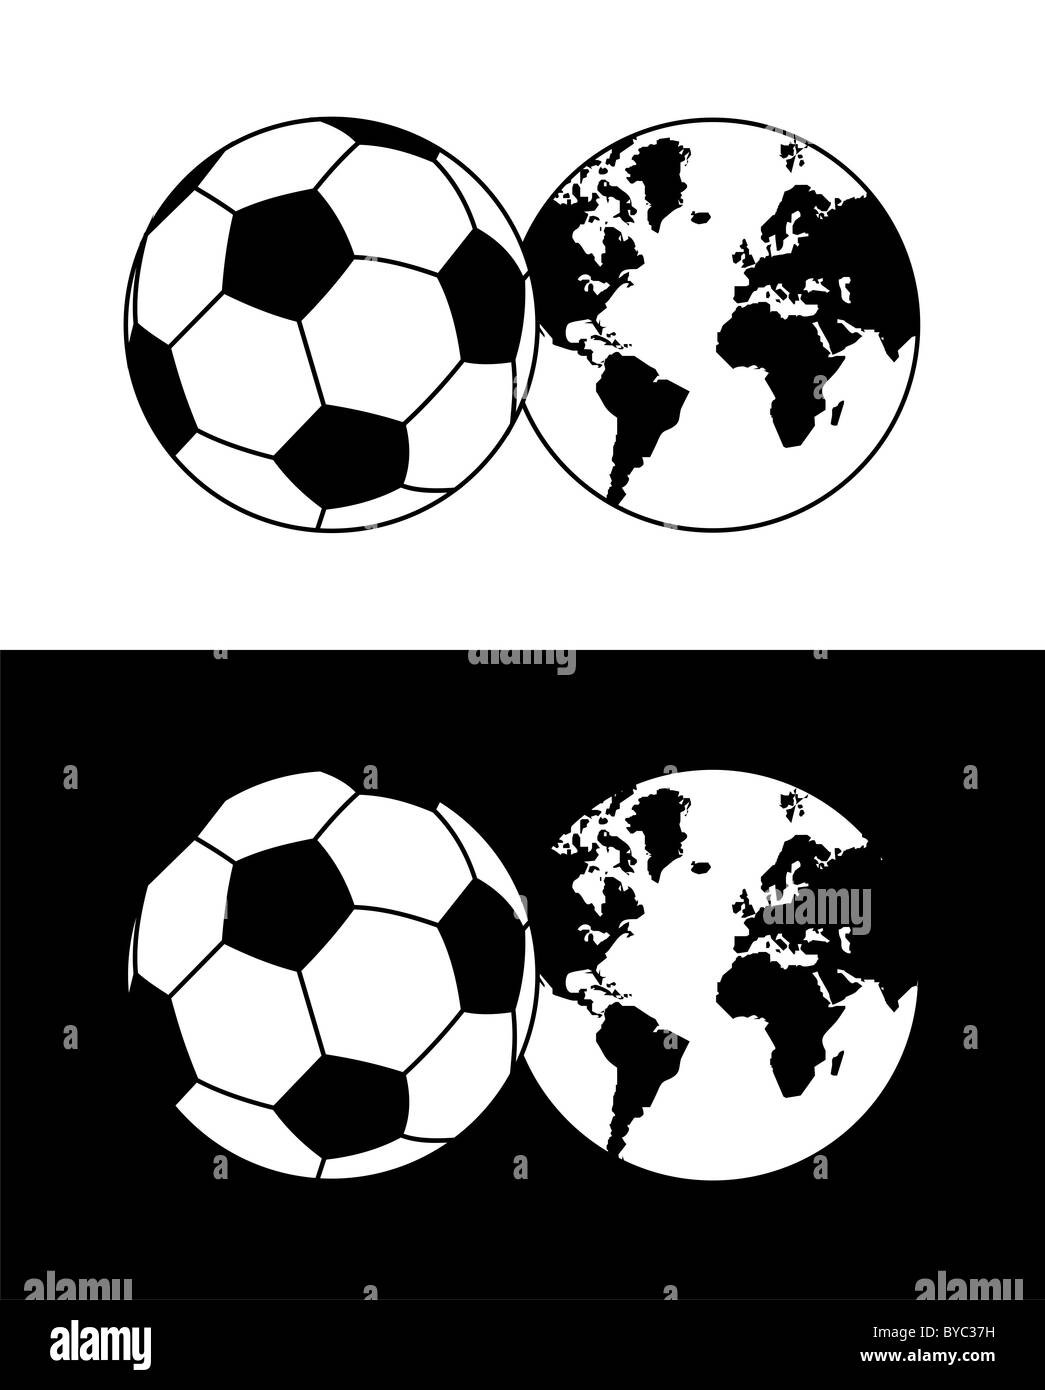 Globo pelota / balón fútbol. blanco y negro